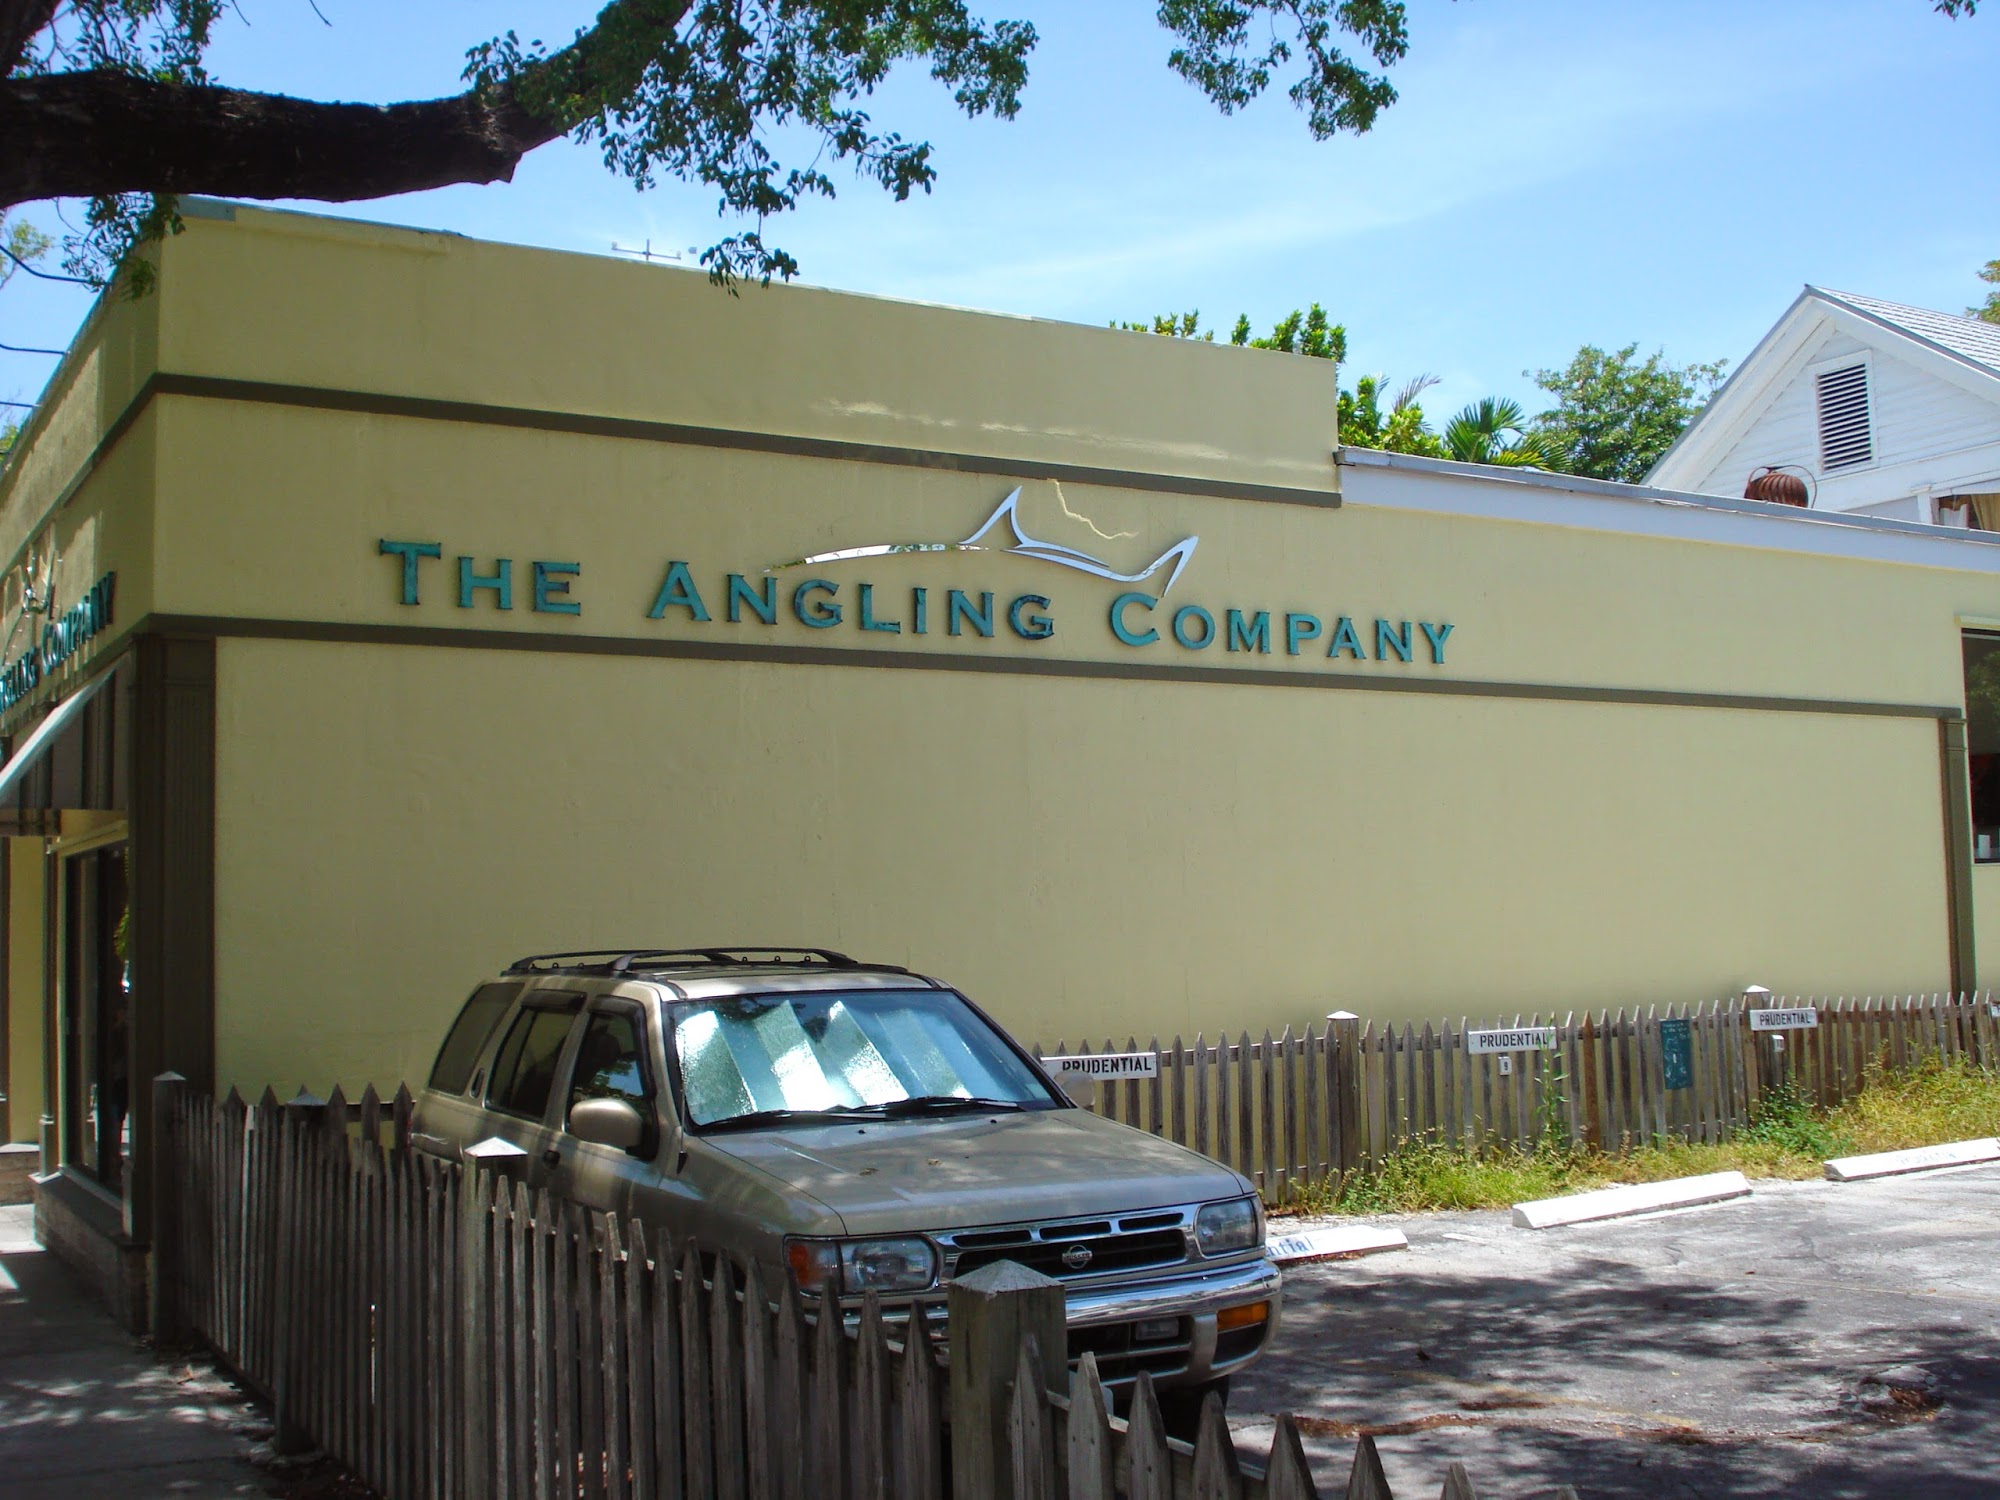 The Angling Company